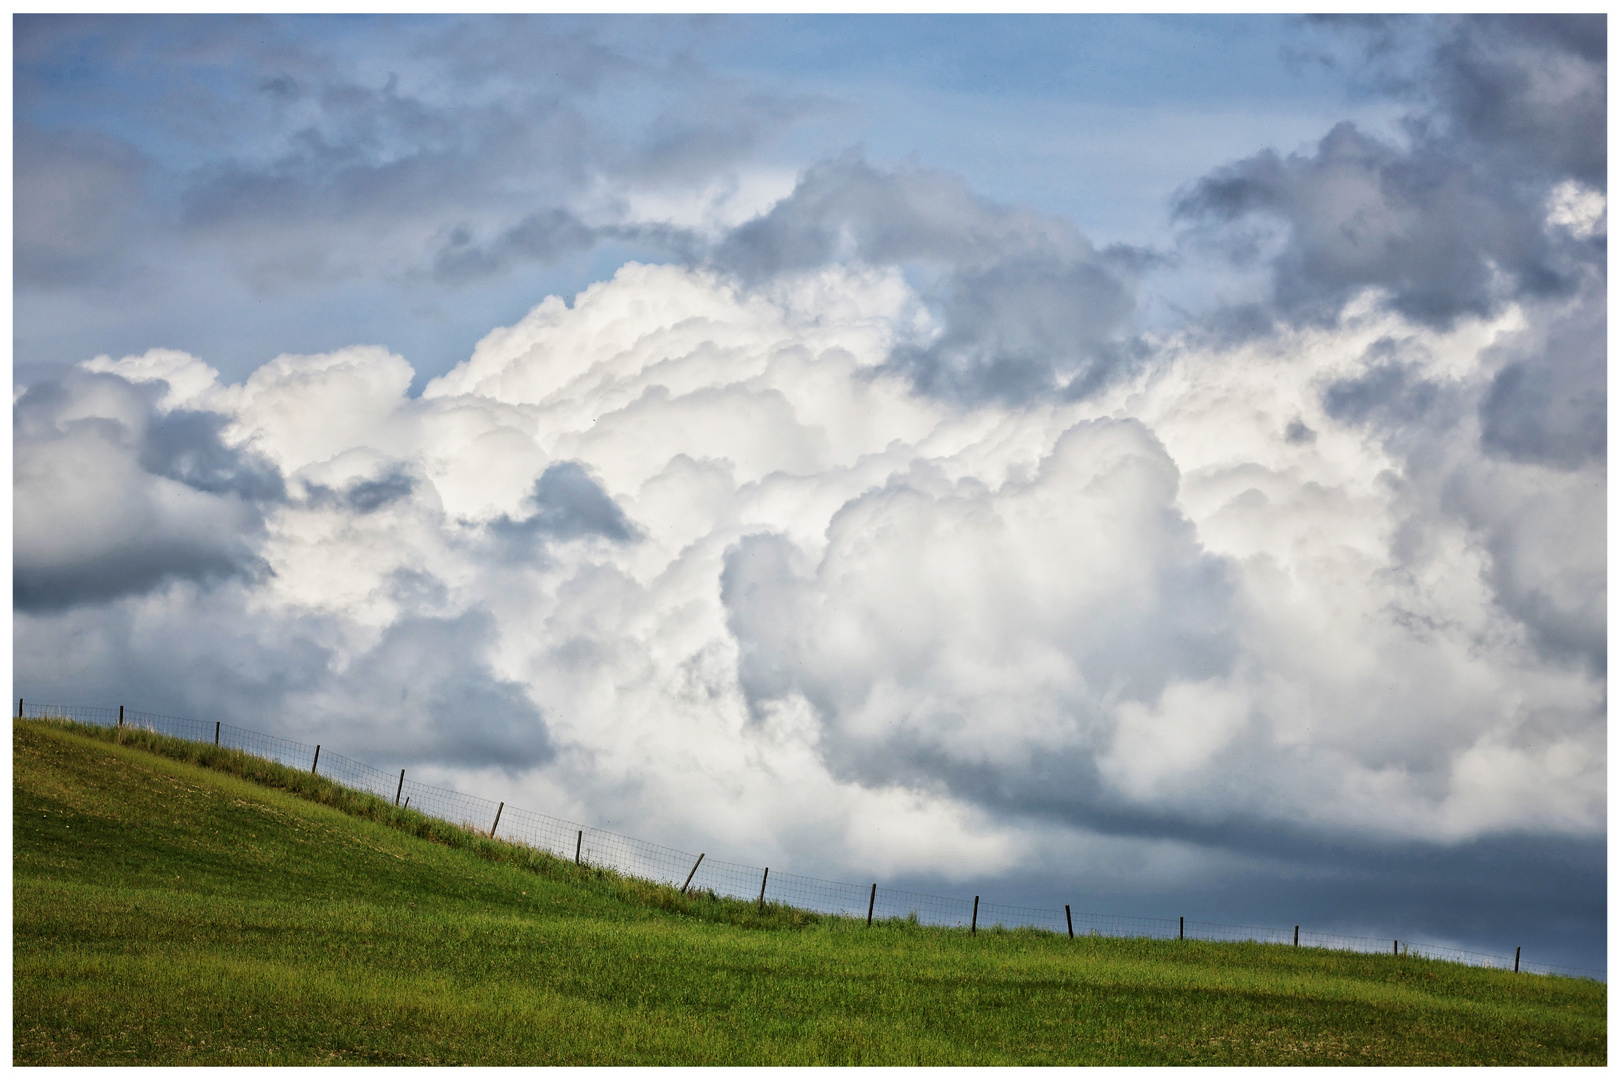 clouded grassland